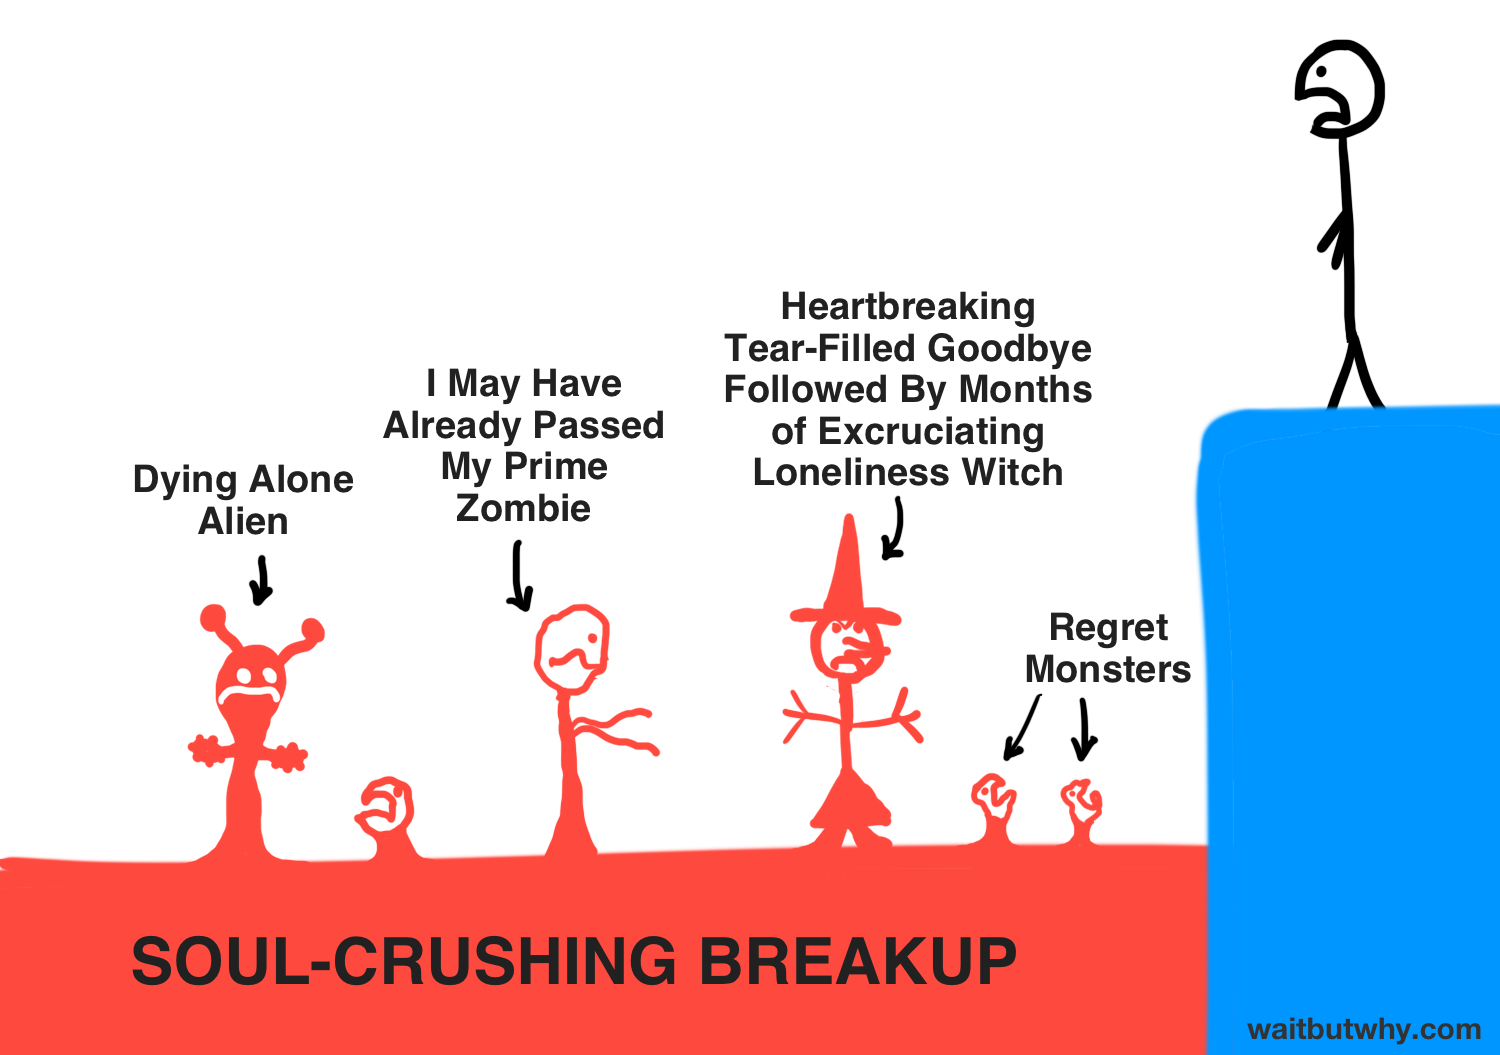 fear monsters on the "soul-crushing breakup" side